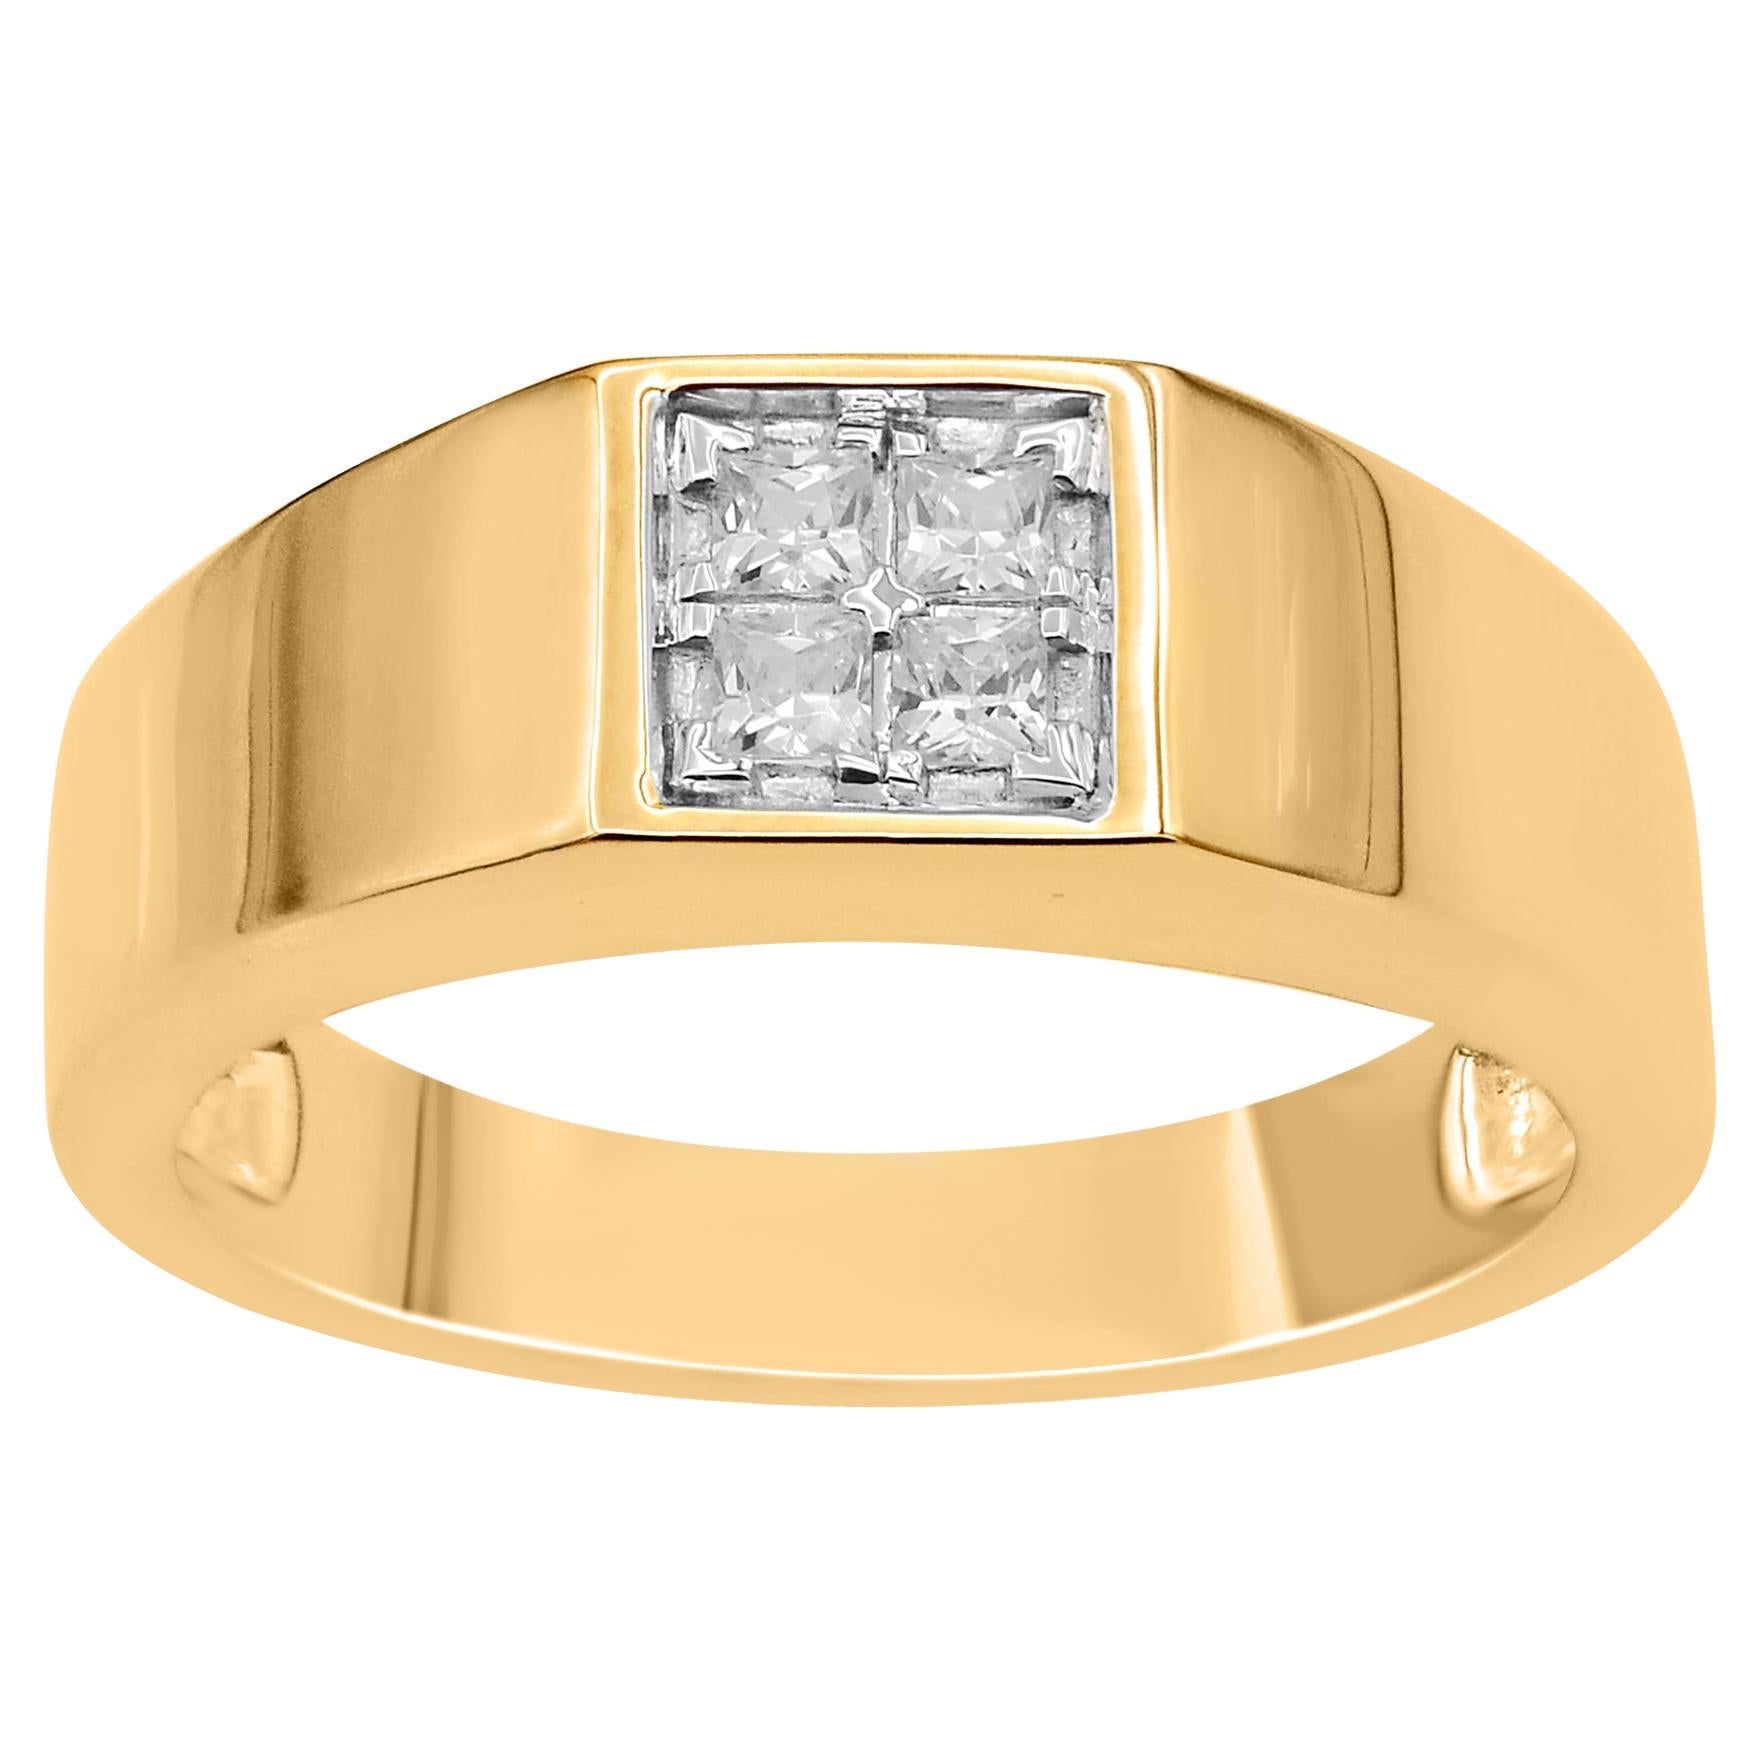 TJD 0.30 Carat Princess Cut Diamond 18 Karat Yellow Gold Men's Ring